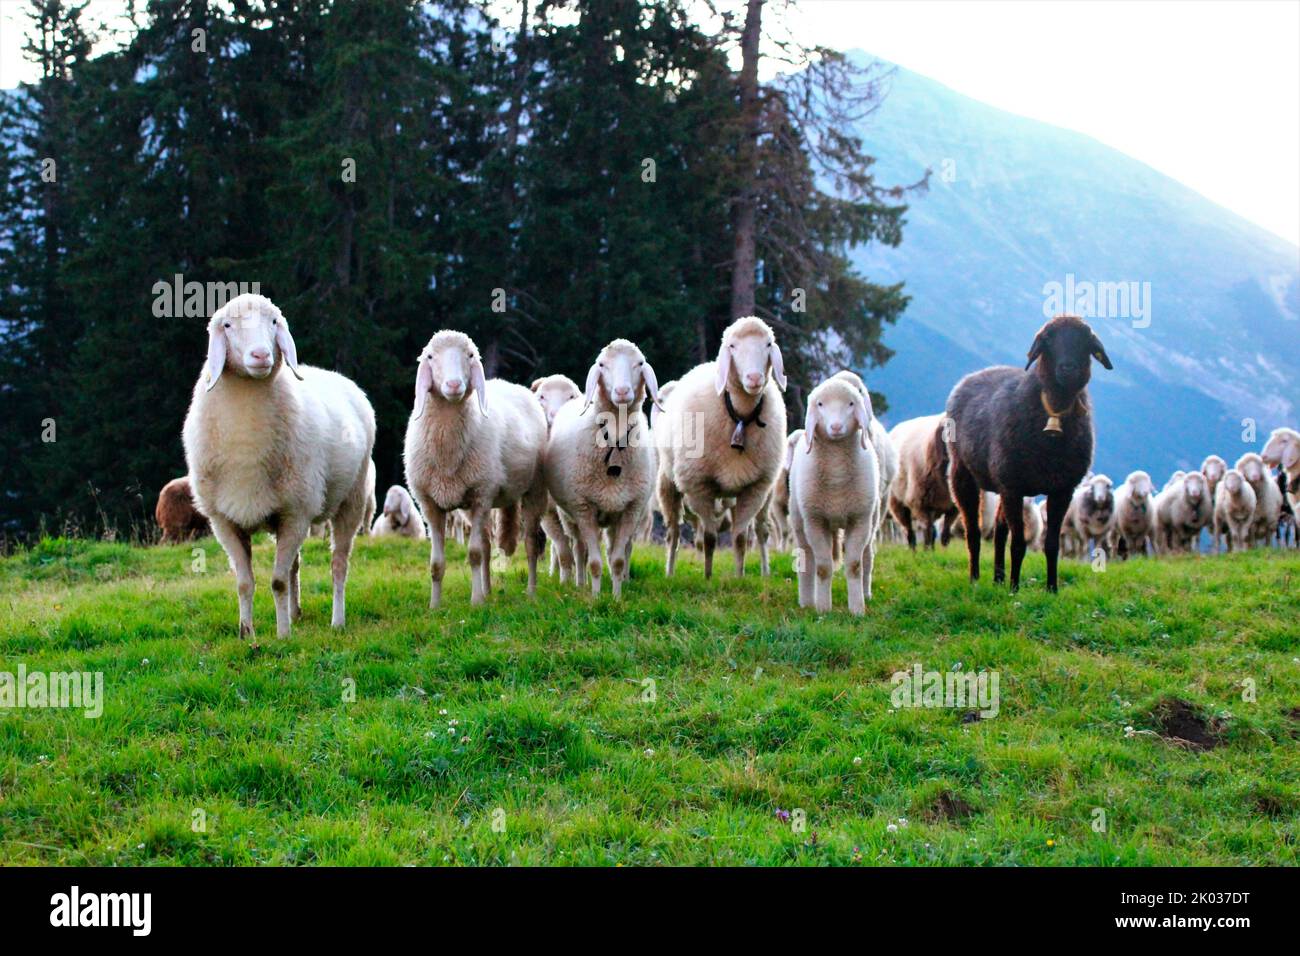 Hike to Wörner Sattel, sheep at Zunderbergkopf, Rehberg, Europe, Germany, Bavaria, Upper Bavaria, Werdenfelser Land, Alpenwelt Karwendel, Isar Valley, Mittenwald Stock Photo